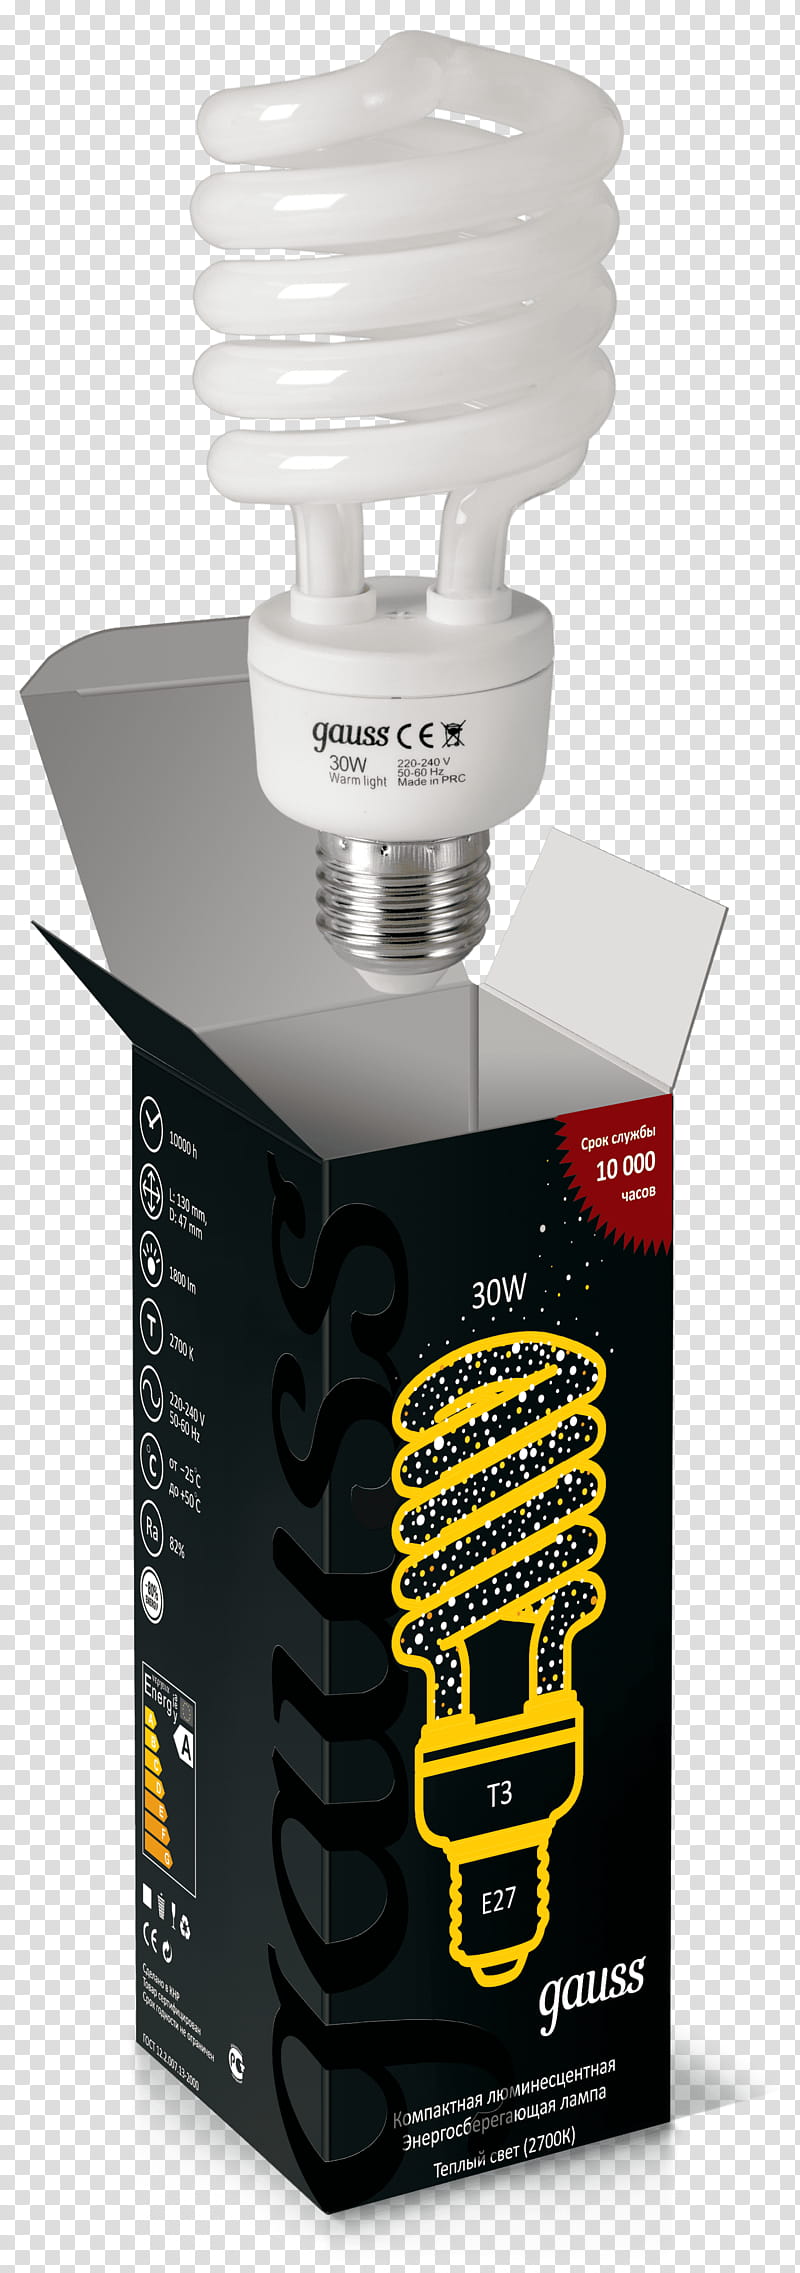 Light Bulb, Energy Saving Lamp, Fluorescent Lamp, Edison Screw, Incandescent Light Bulb, Price, Light Fixture, Street Light transparent background PNG clipart